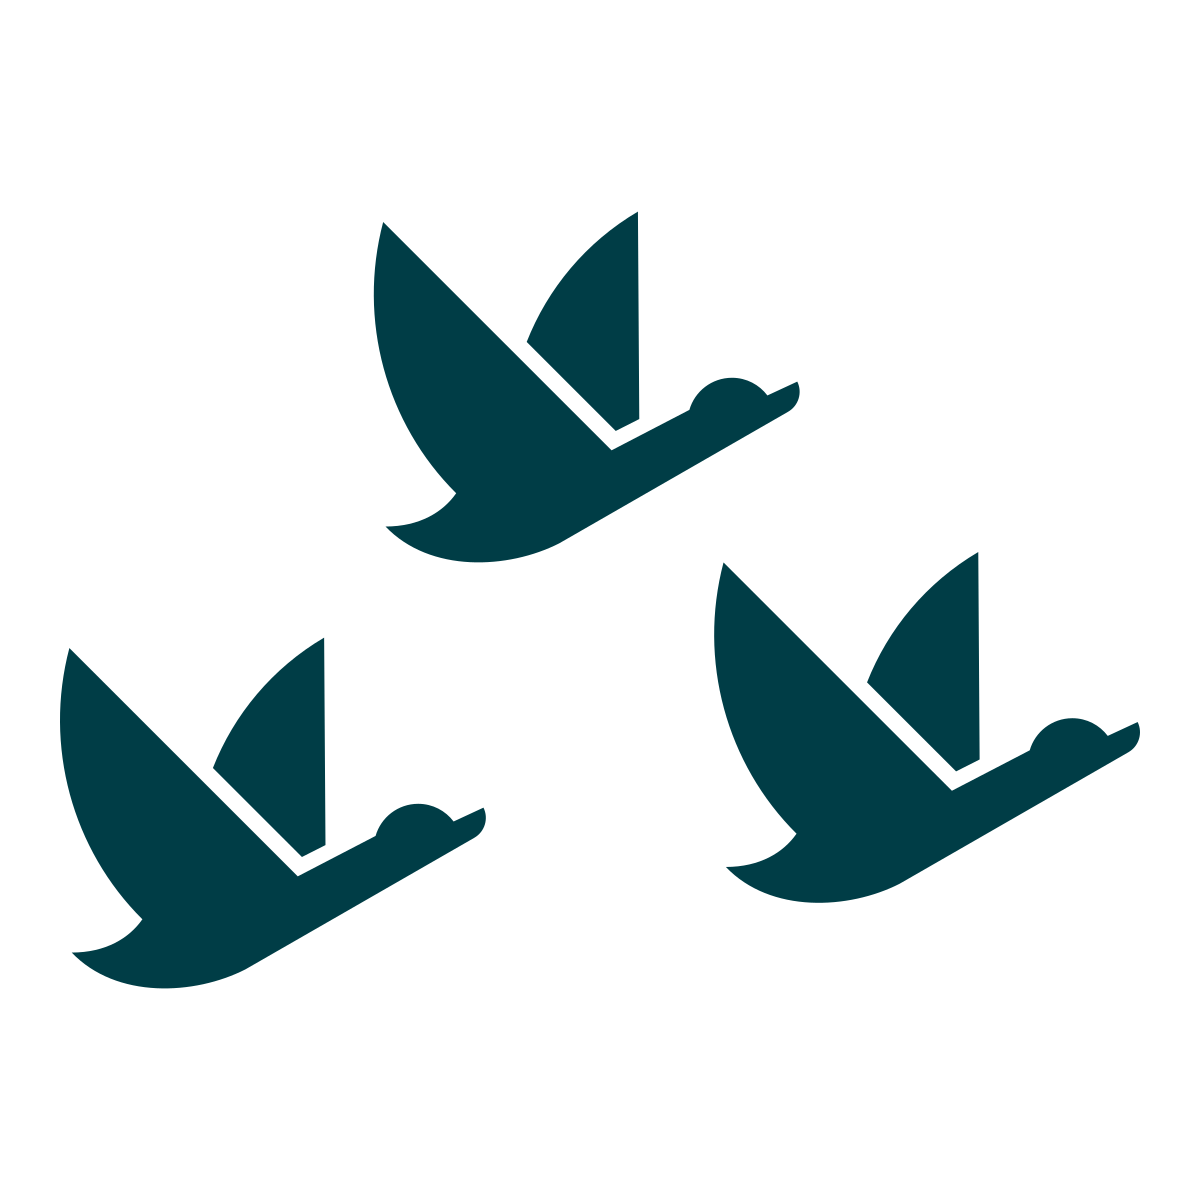 Image of three flying ducks